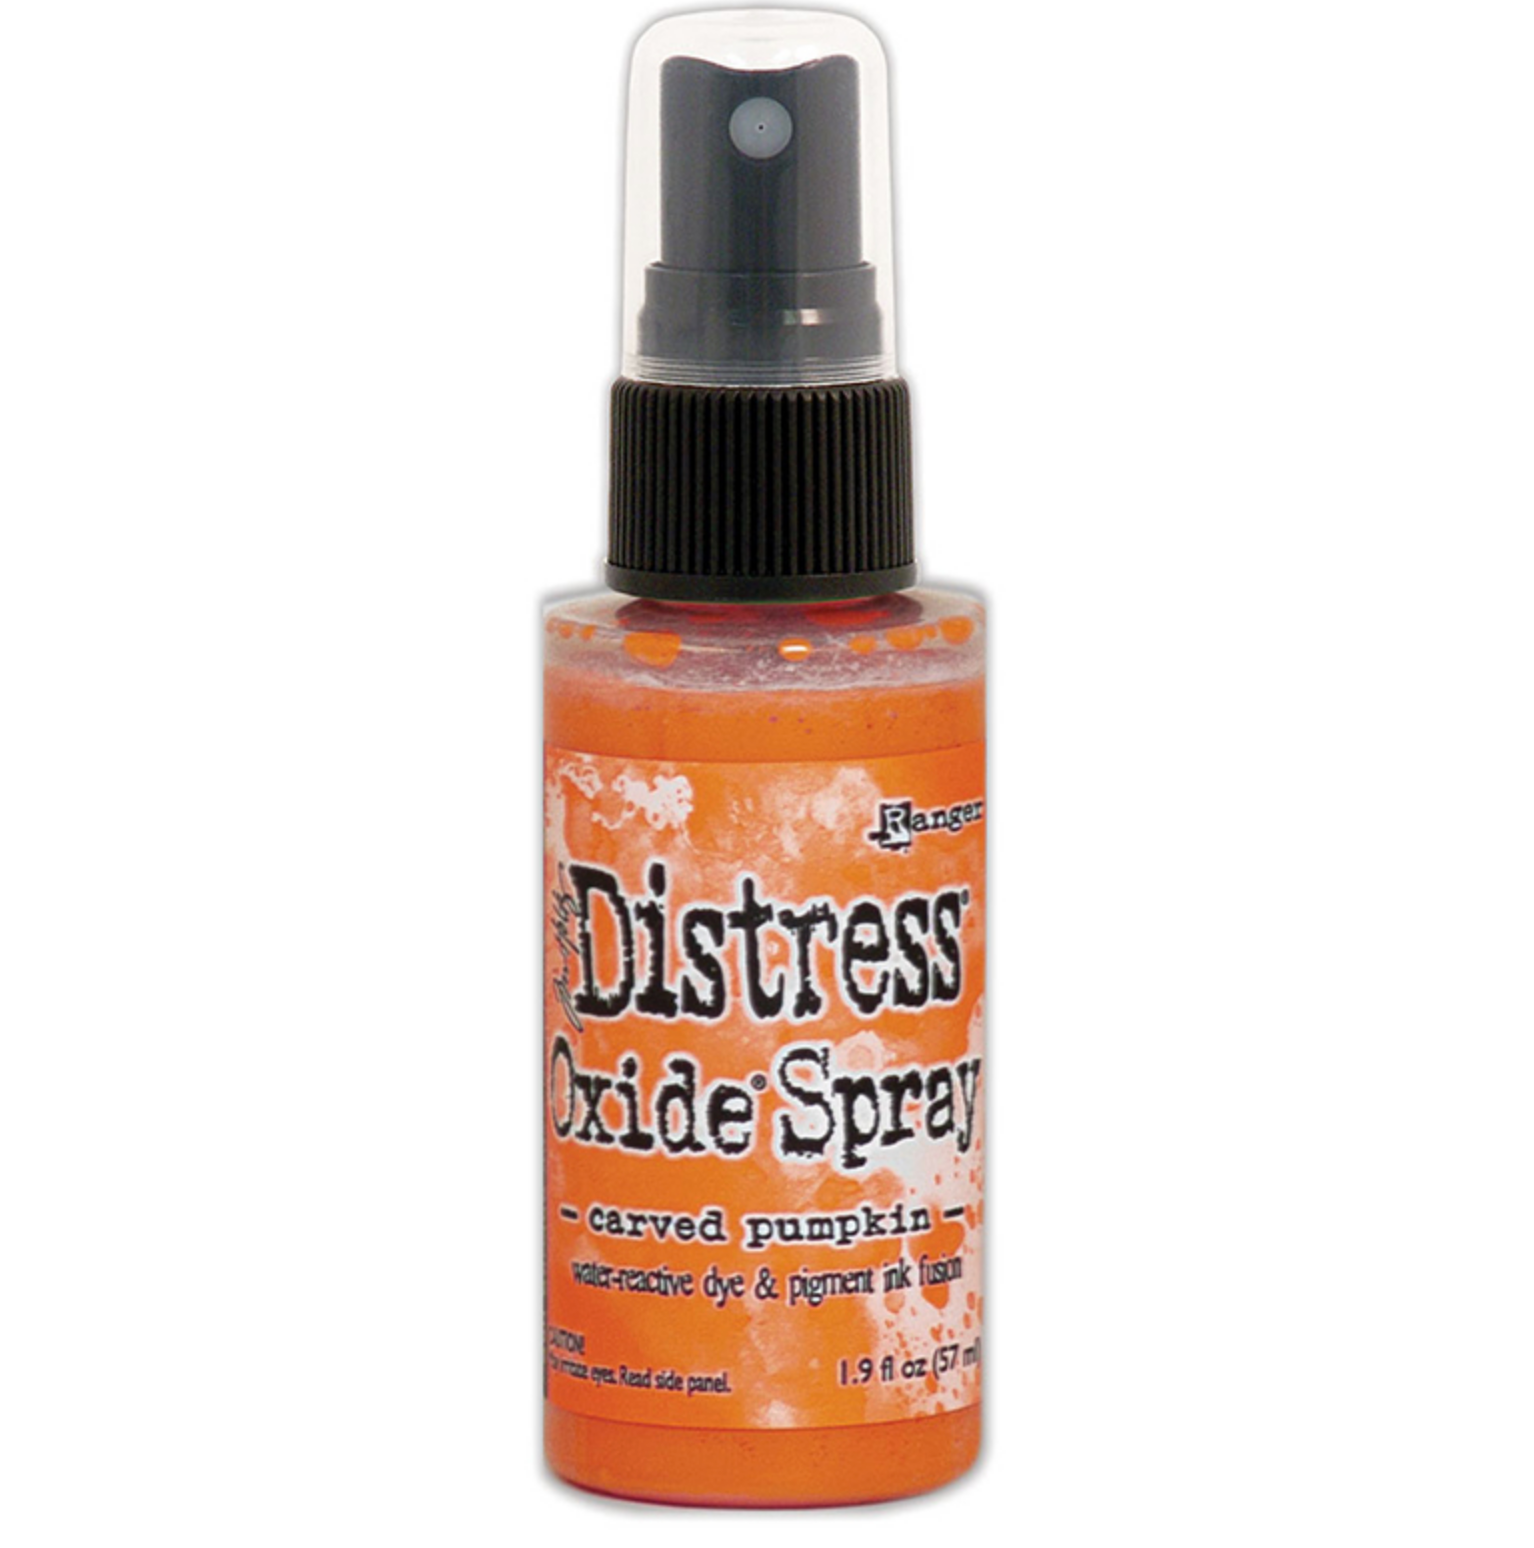 Tim Holtz Distress Oxide Spray - Carved Pumpkin - Ranger Ink